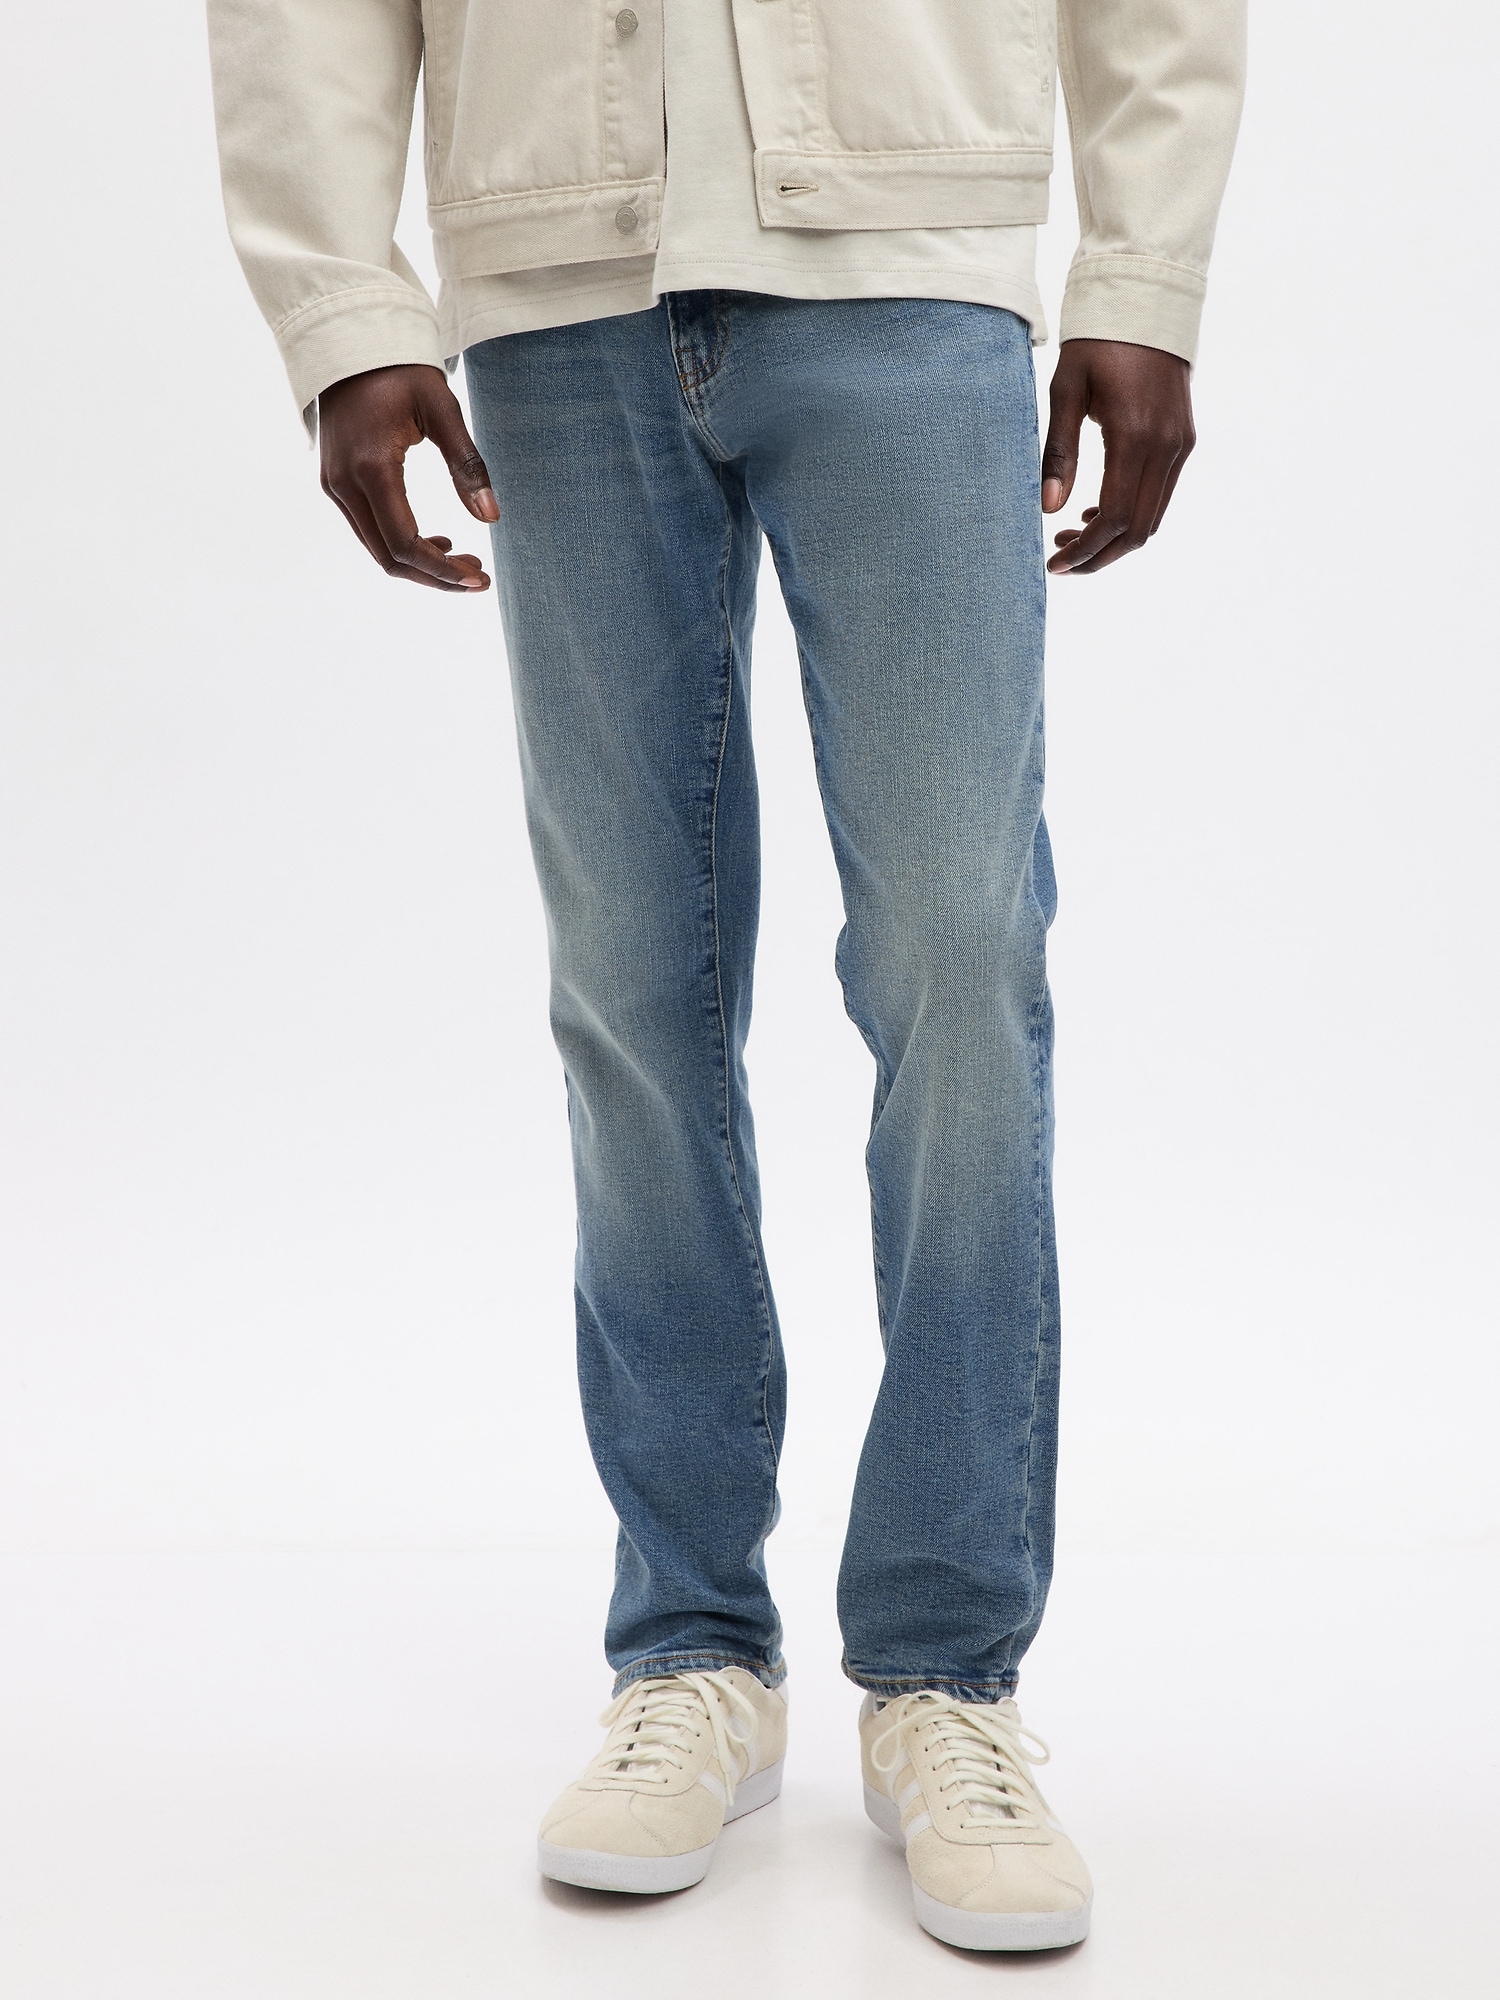 GAP, Jeans, Mens Gap Soft Wear Gap Flex Slim Denim Nwt